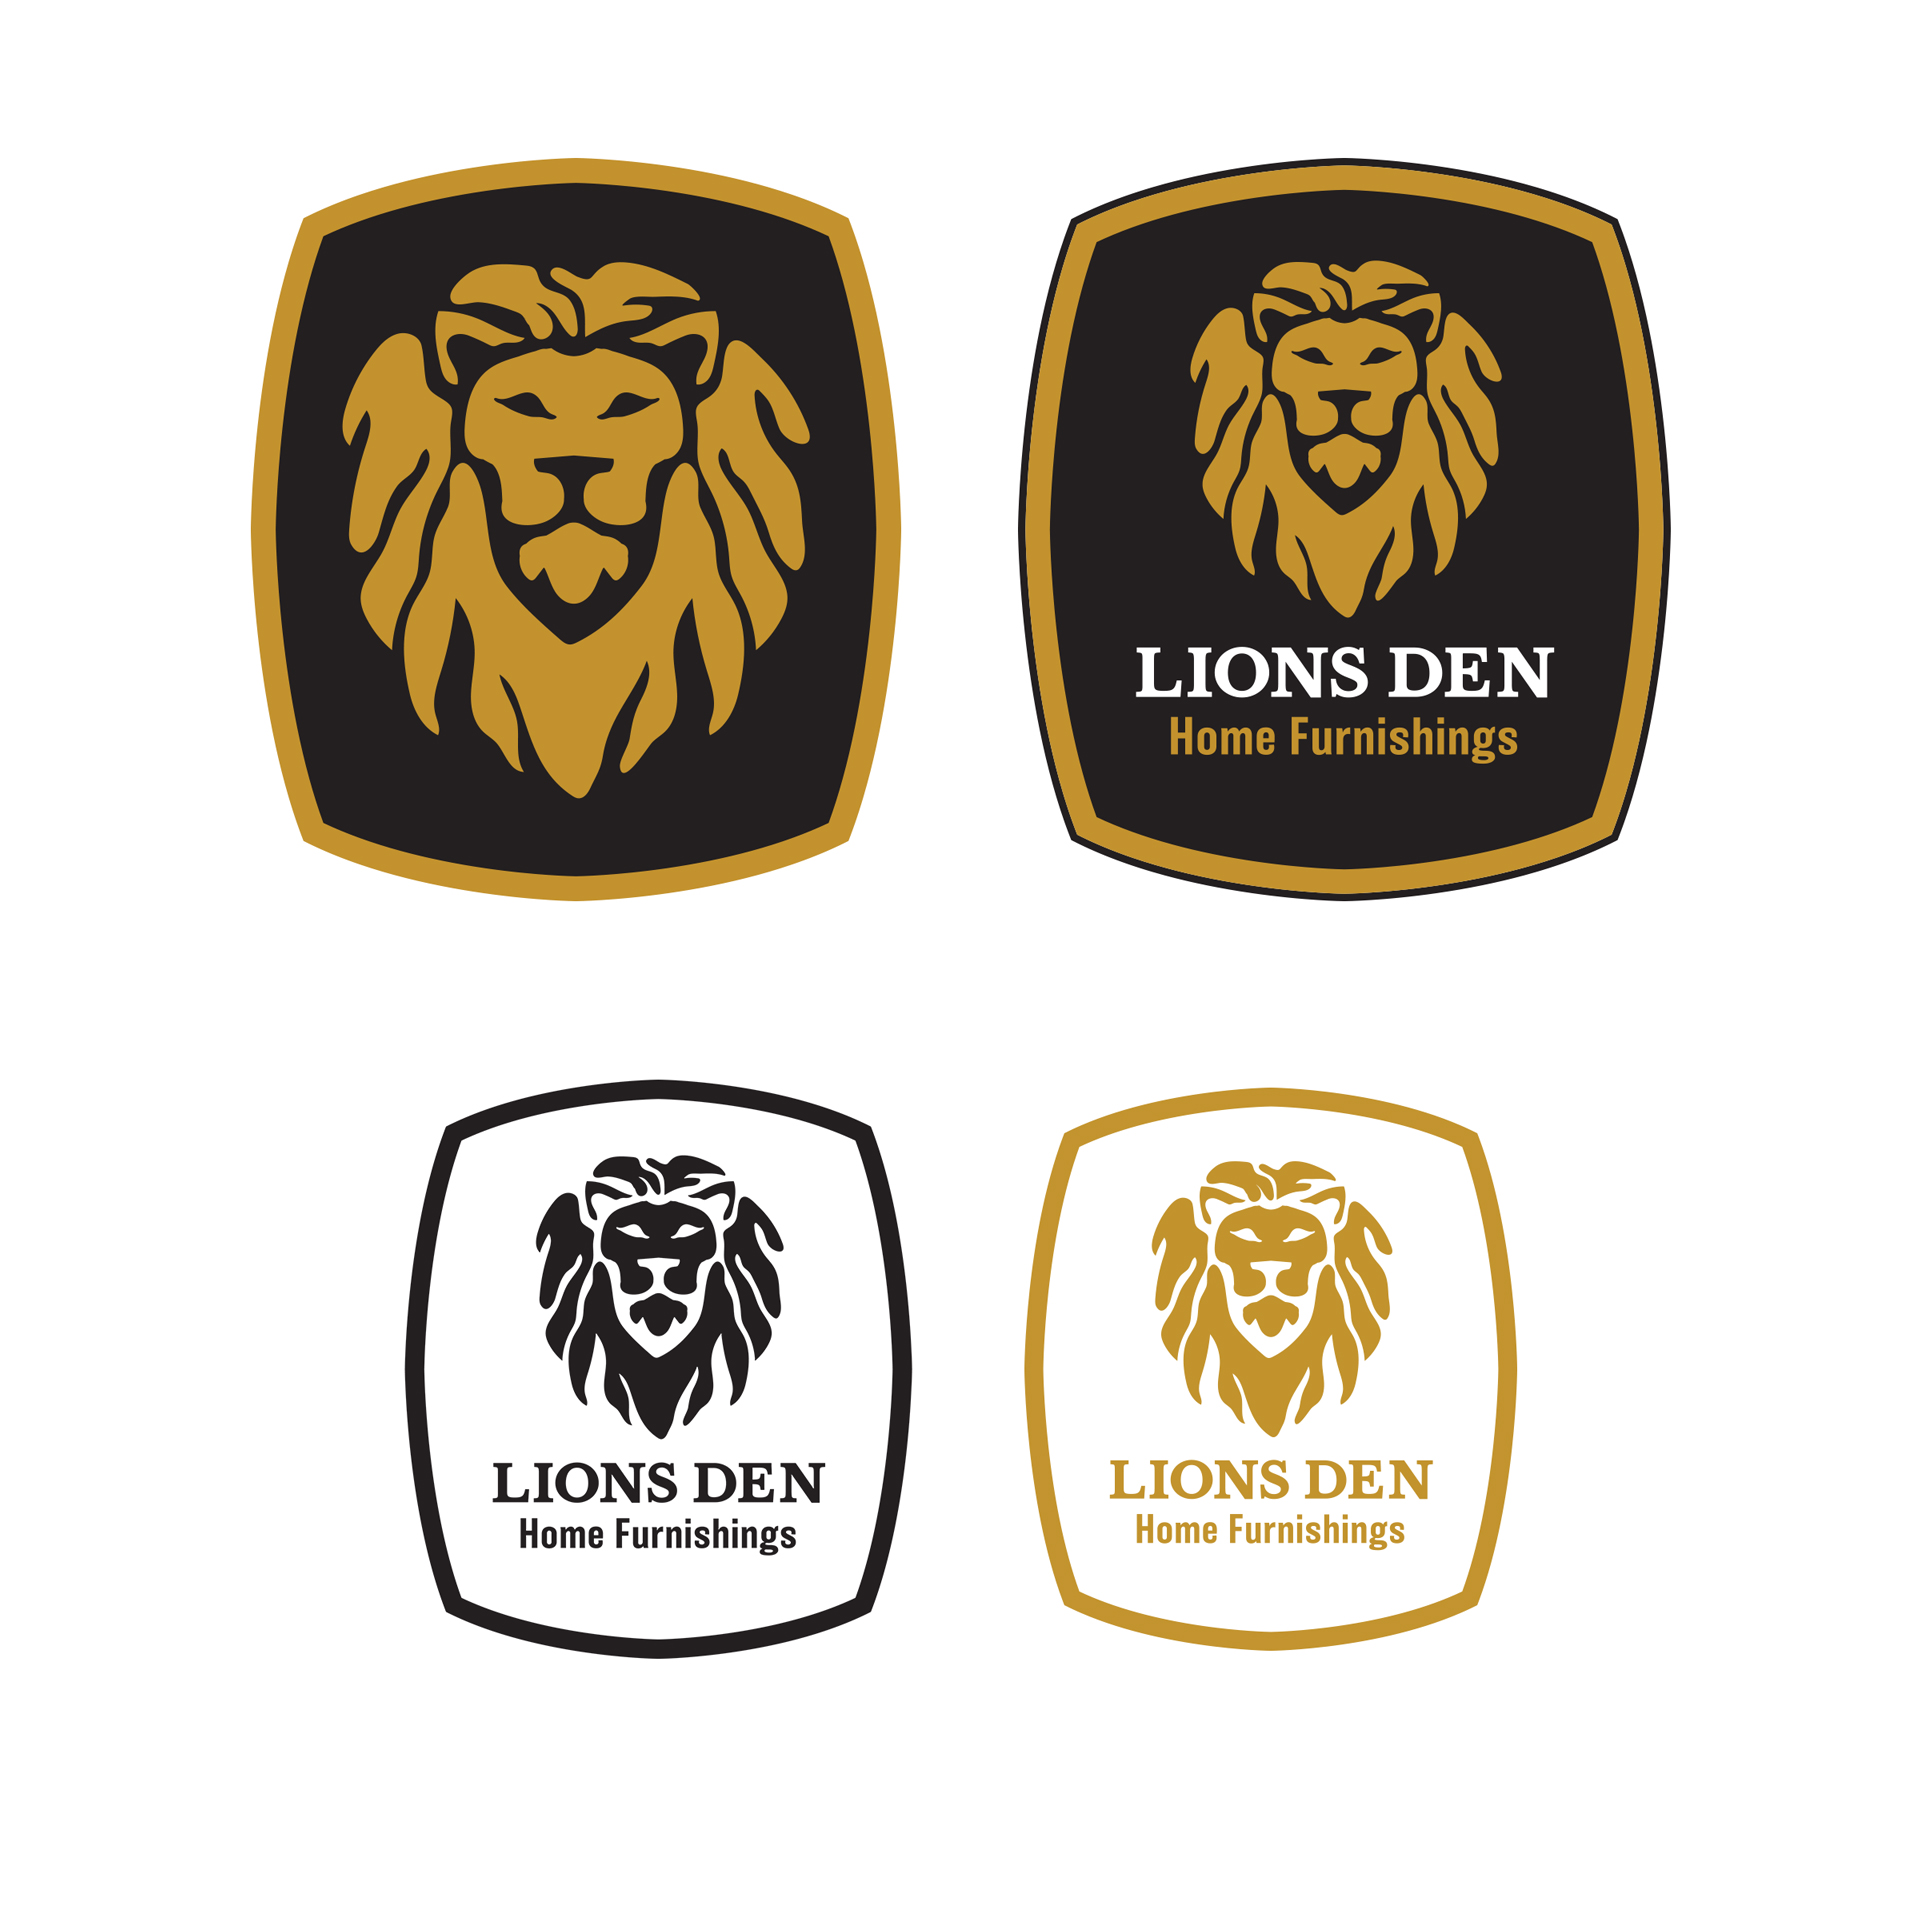 Lions Den Home Furnishings - Logo Design by Rachel Lynn Heisey Graphic Designer in Lancaster, PA and Web Designer